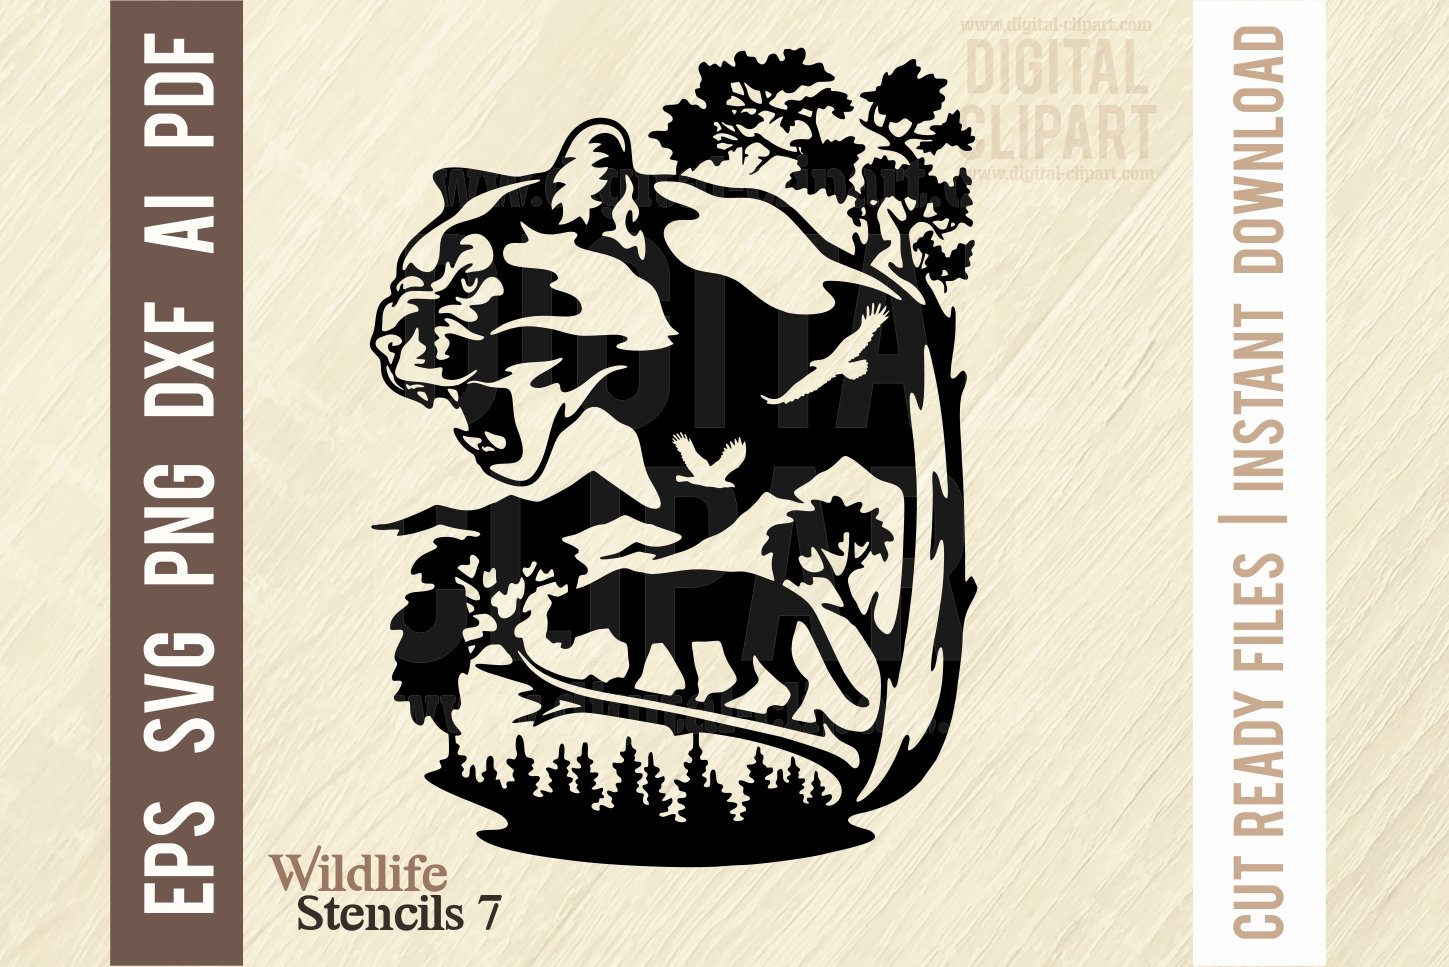 Cougar SVG File - Wildlife Stencils cover image.